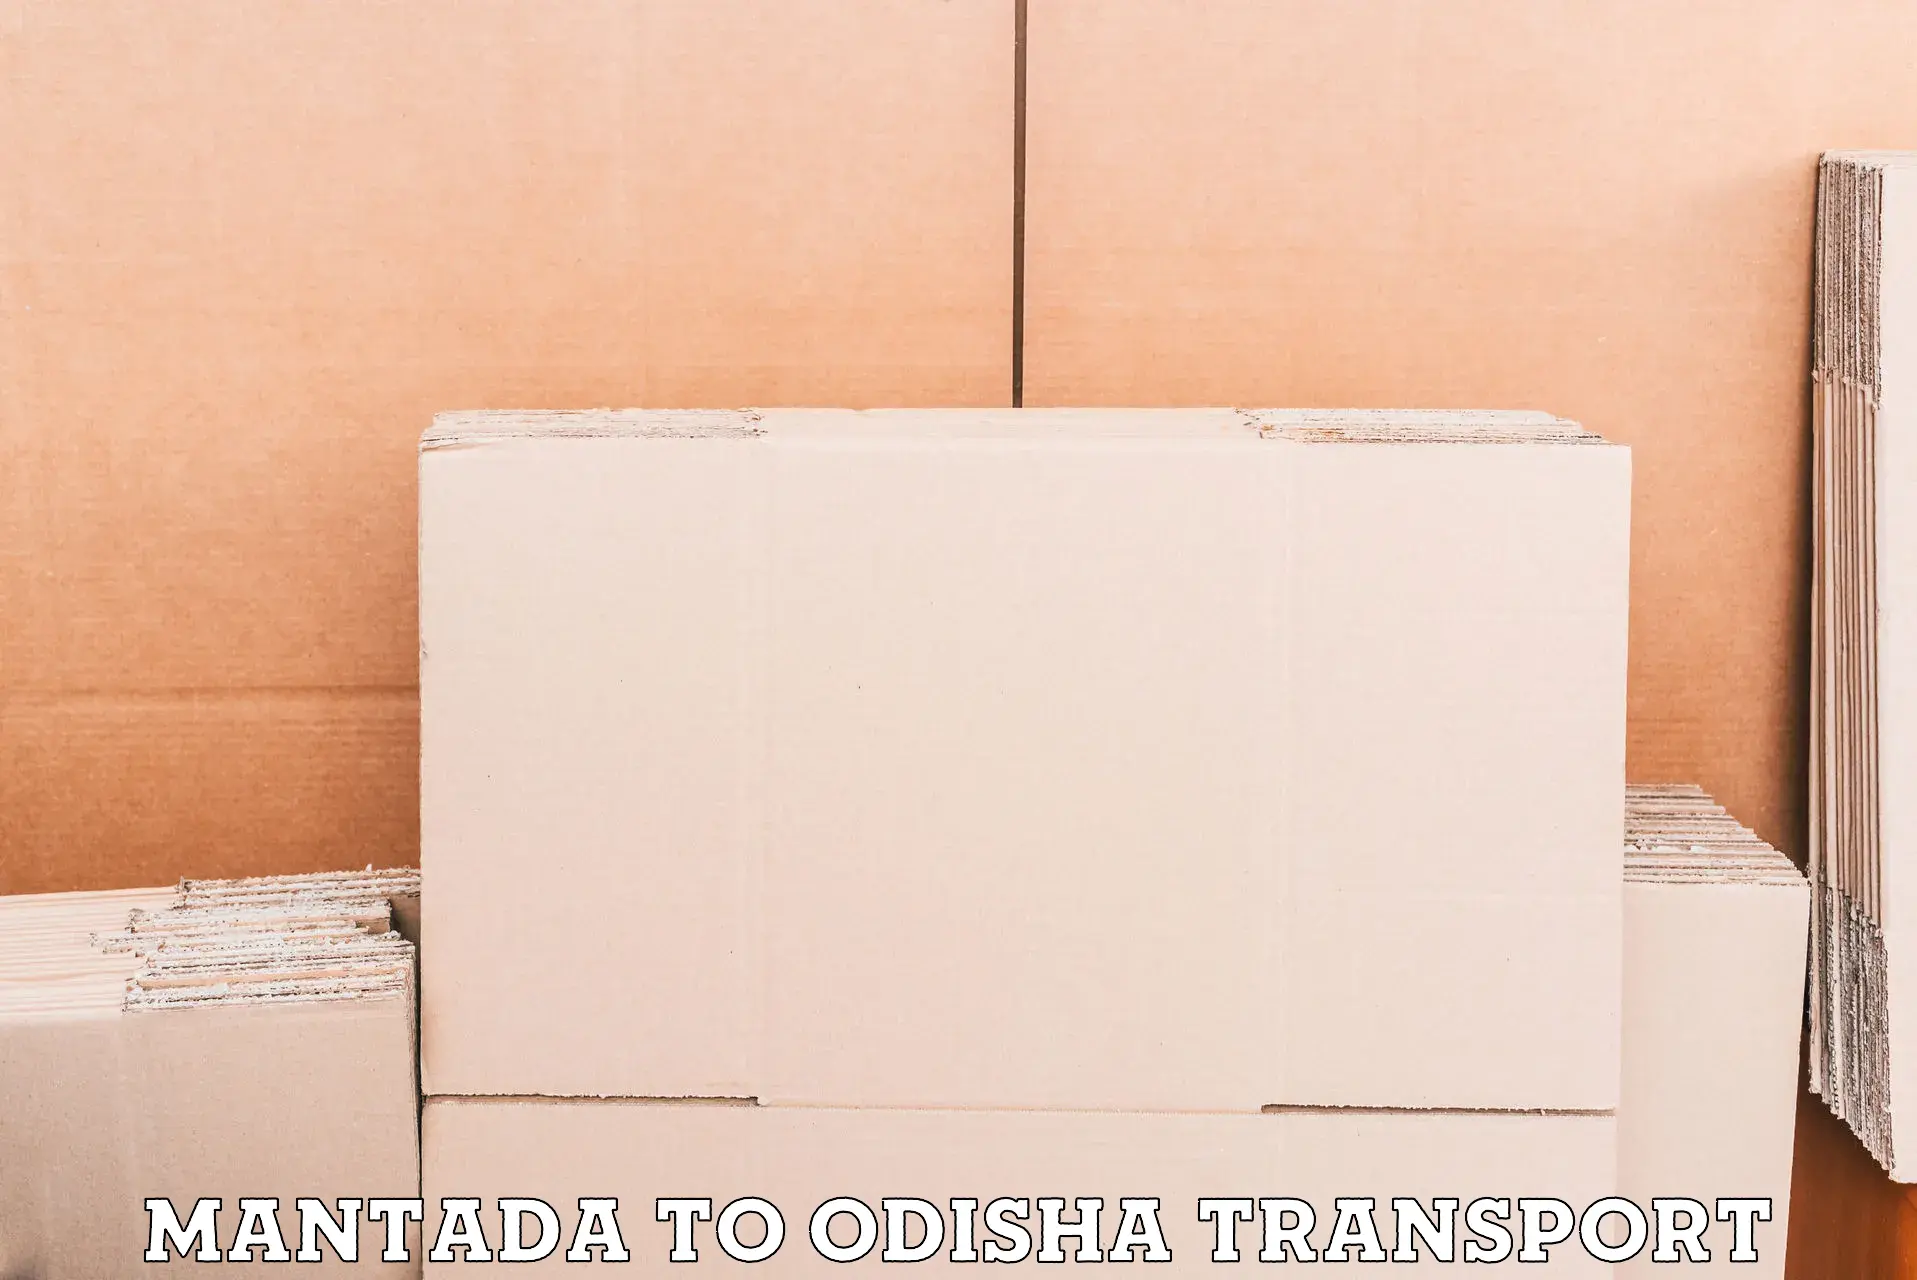 Container transport service Mantada to Kakiriguma